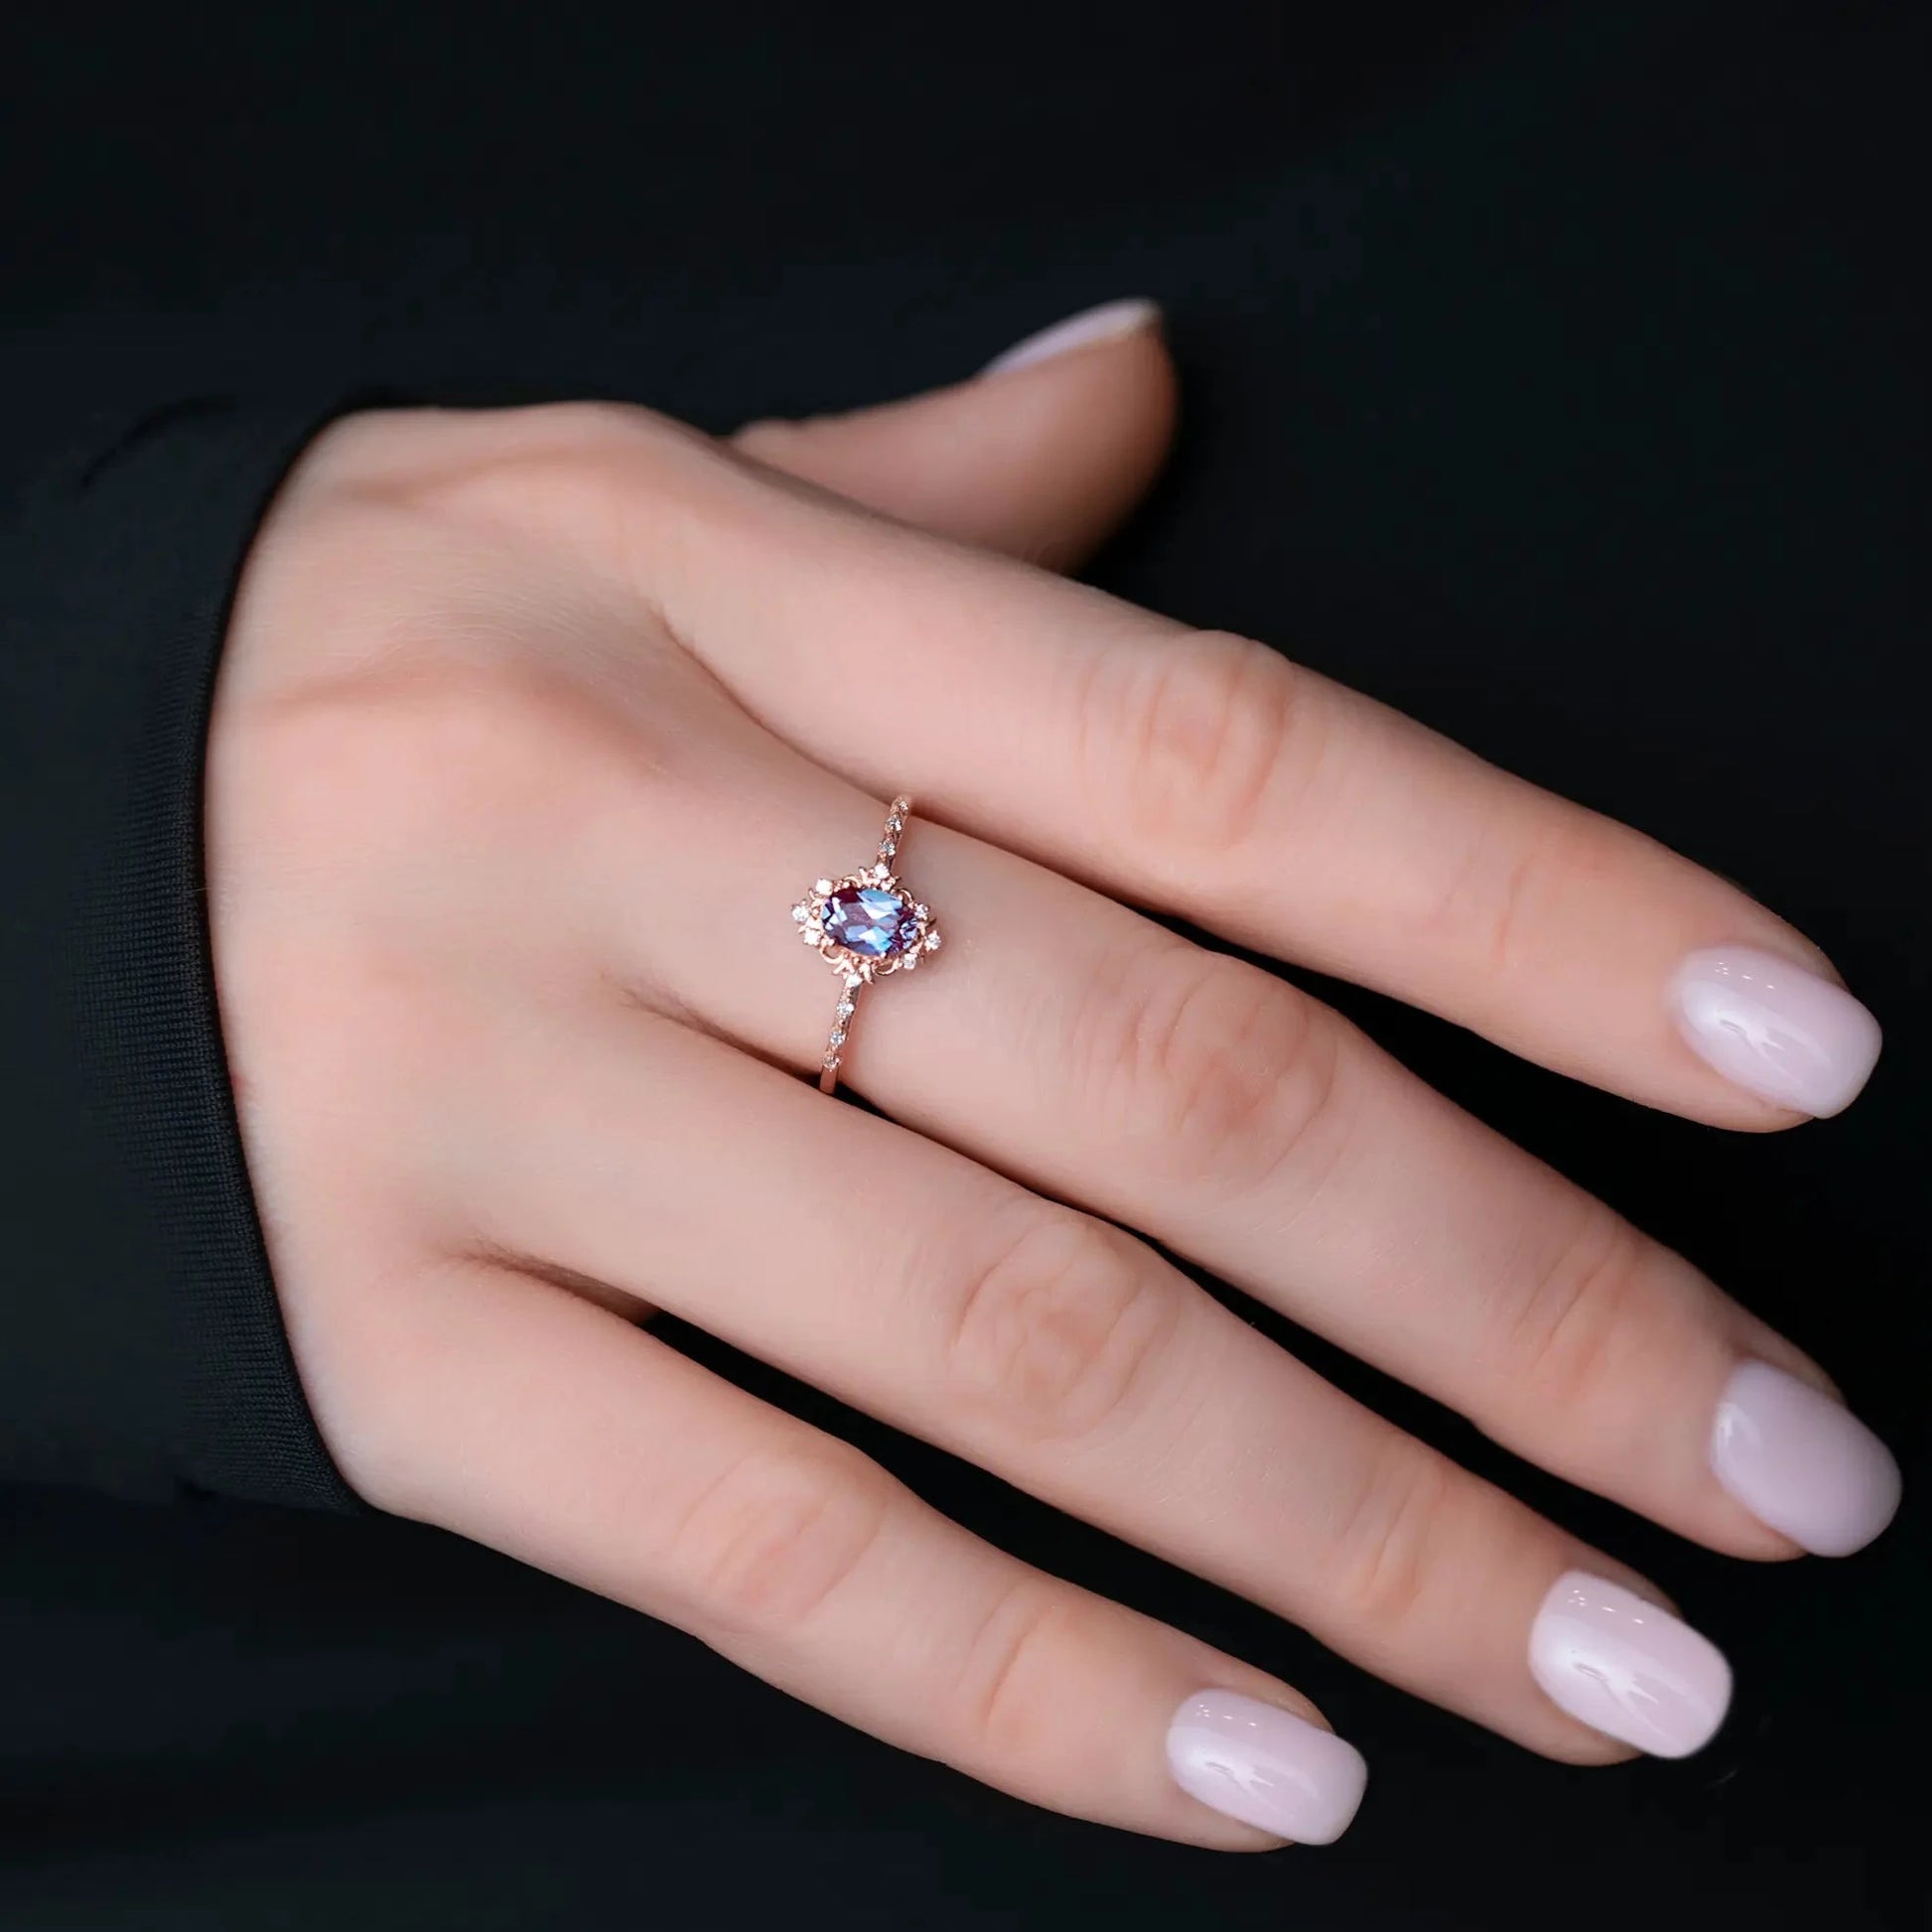 Аlexandrite wedding ring on a woman's finger